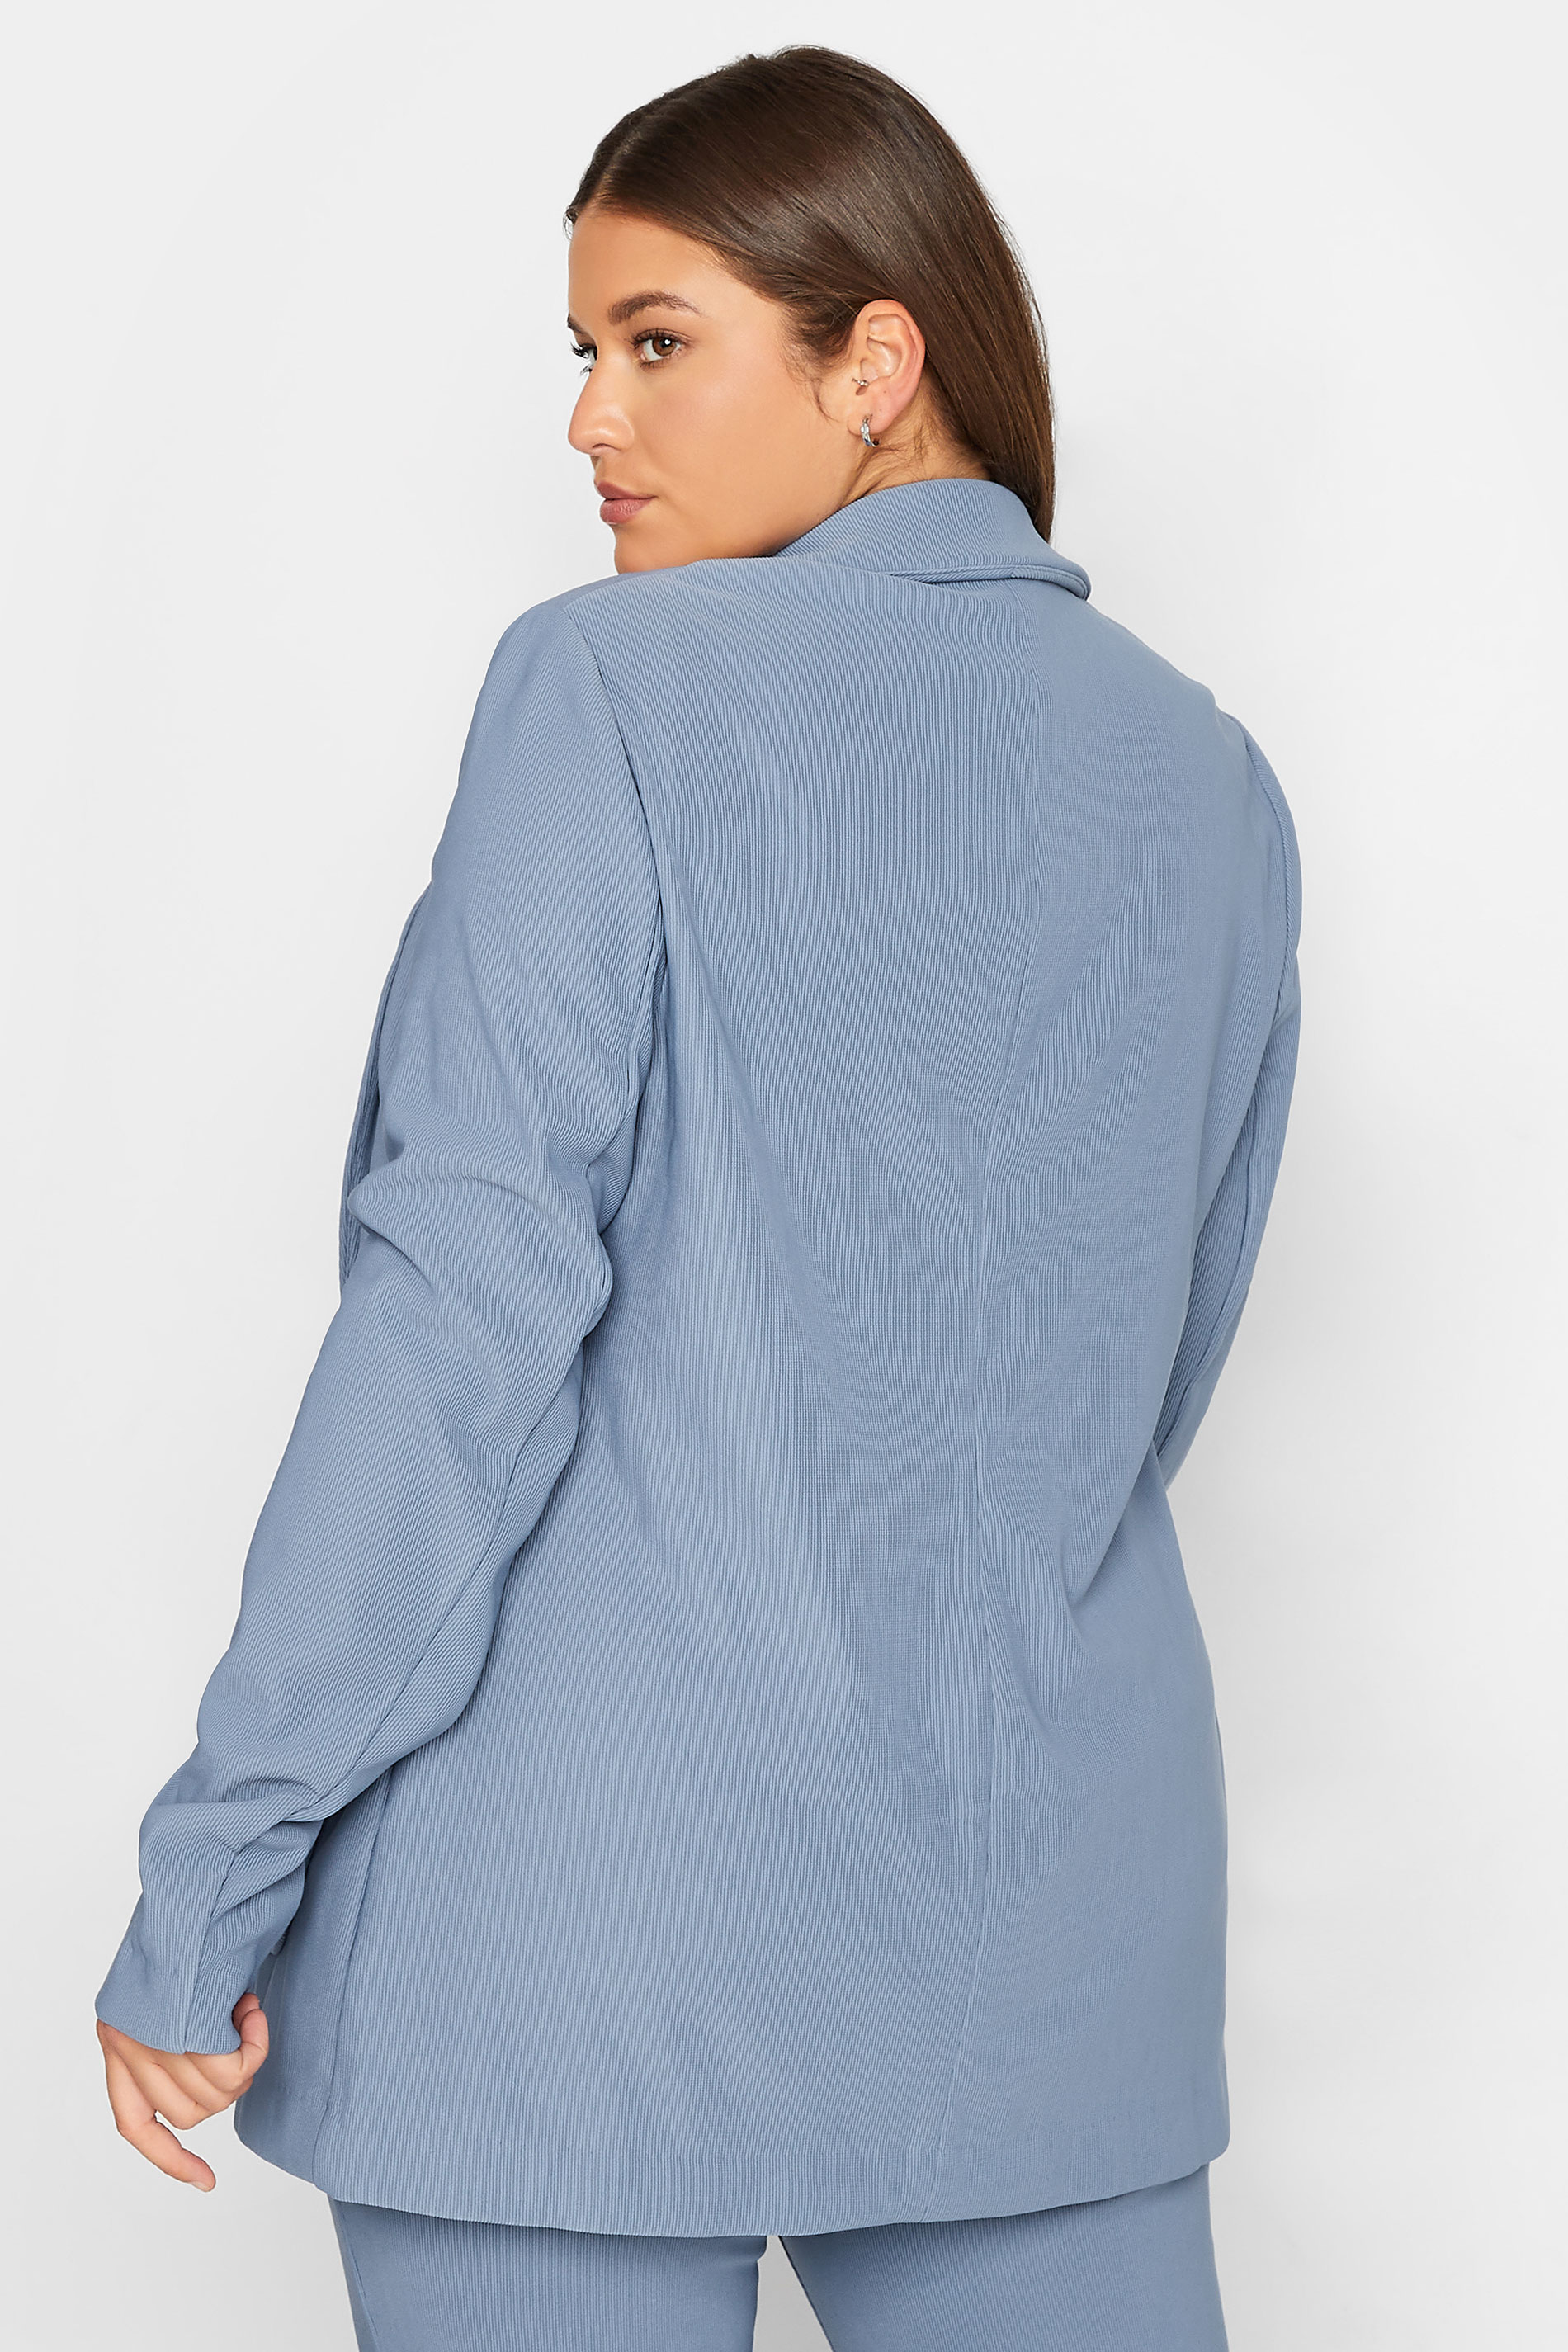 LTS Tall Women's Blue Ribbed Blazer Jacket | Long Tall Sally 3